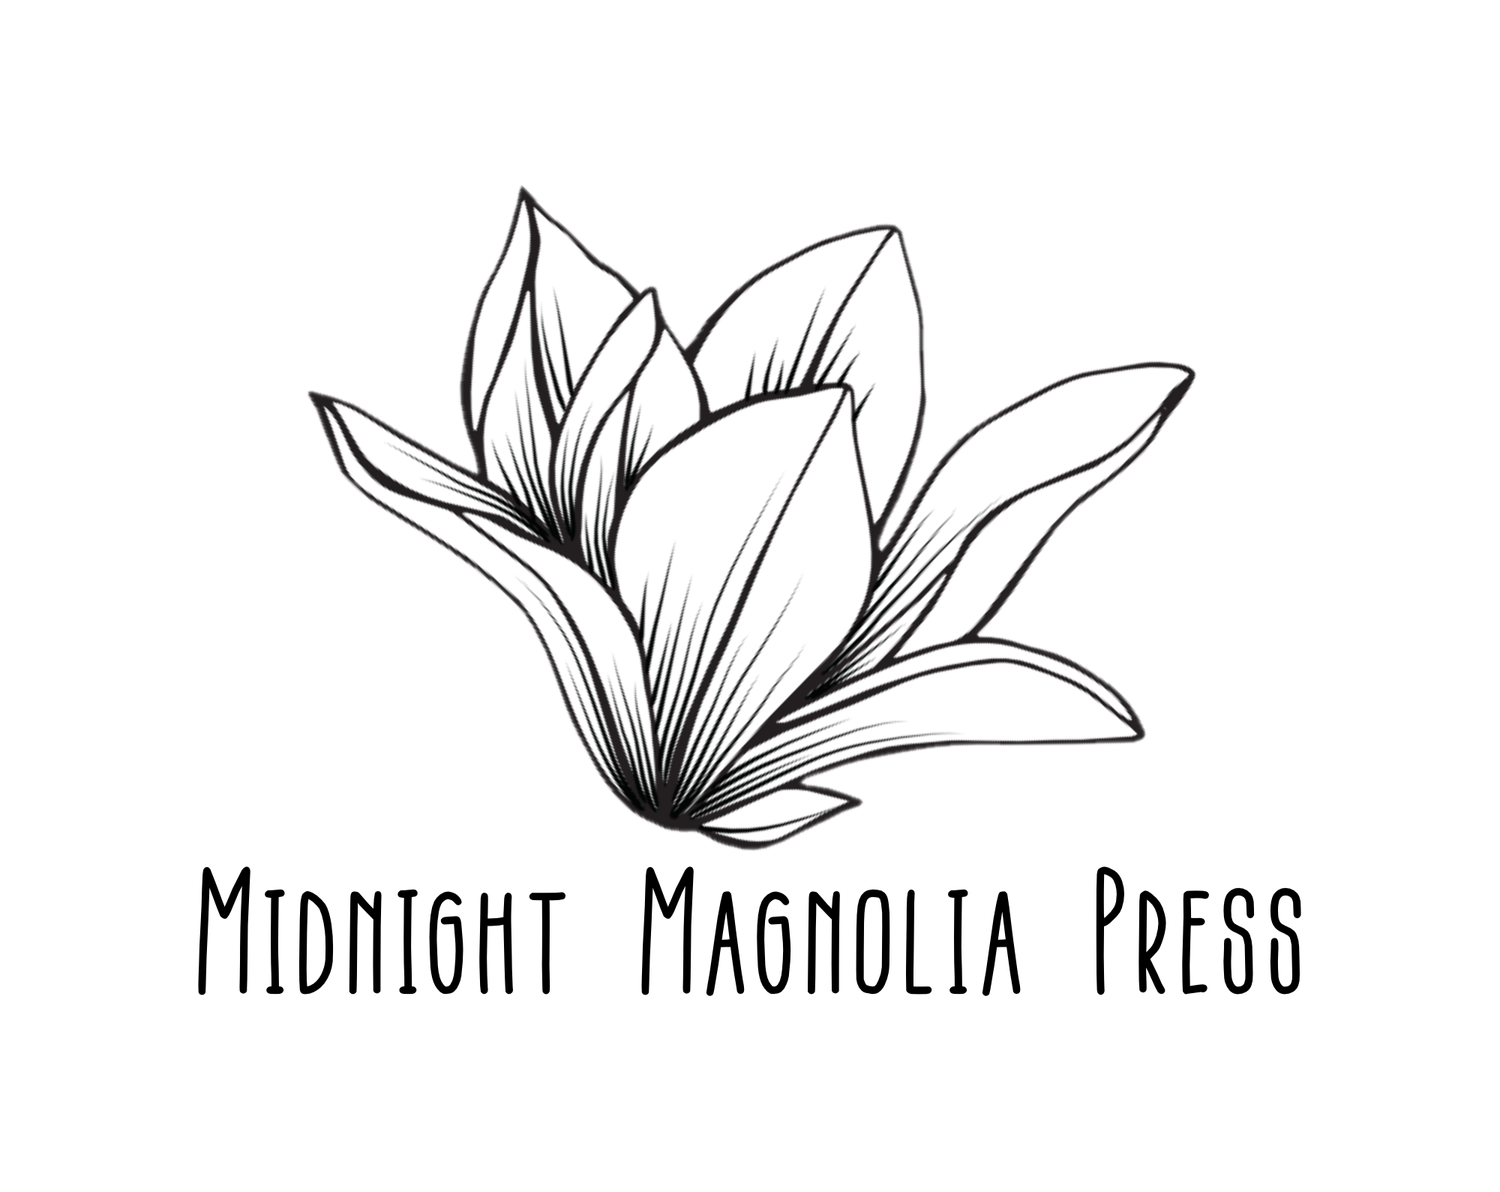 Midnight Magnolia Press